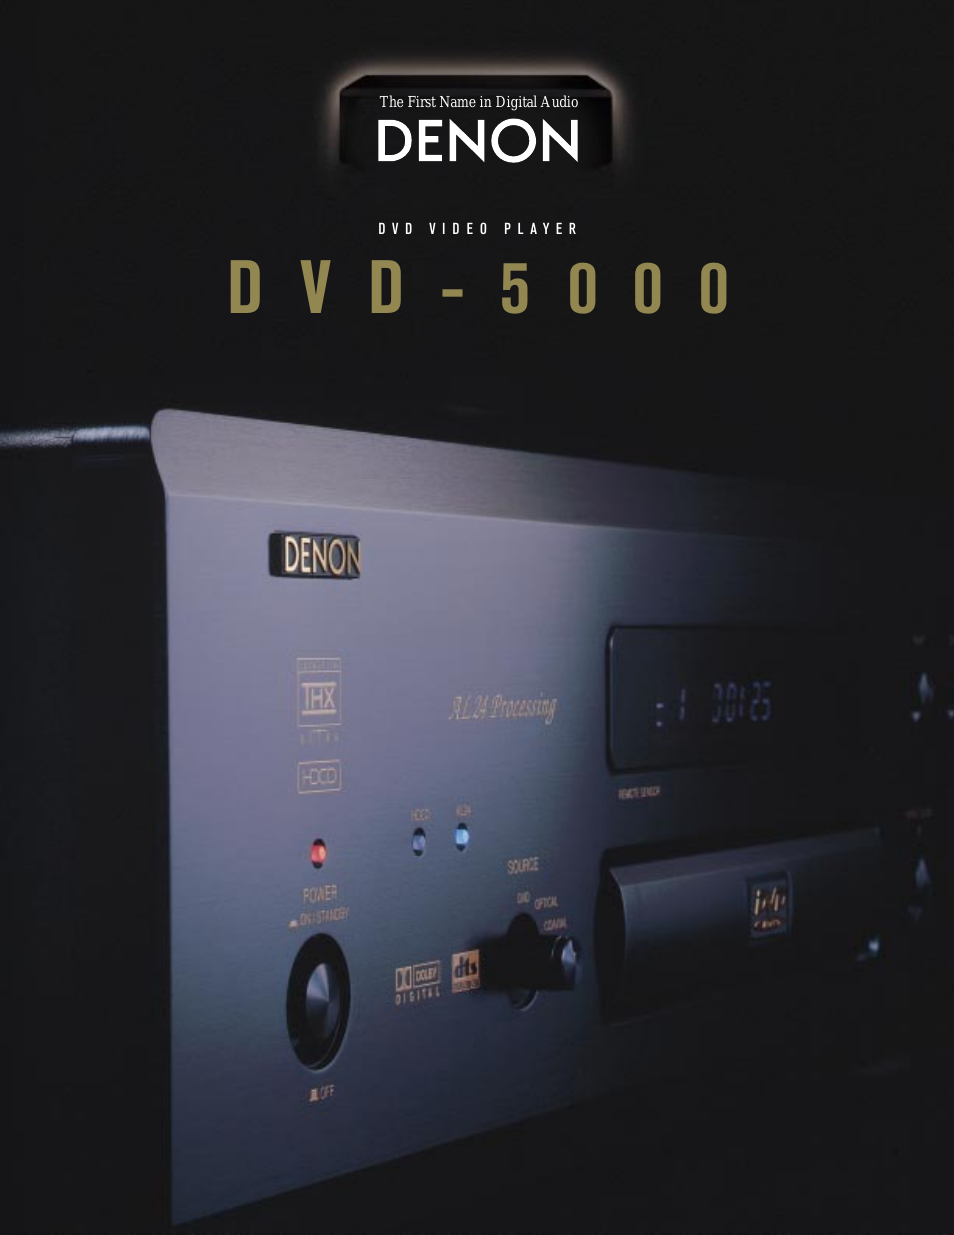 DVD-5000